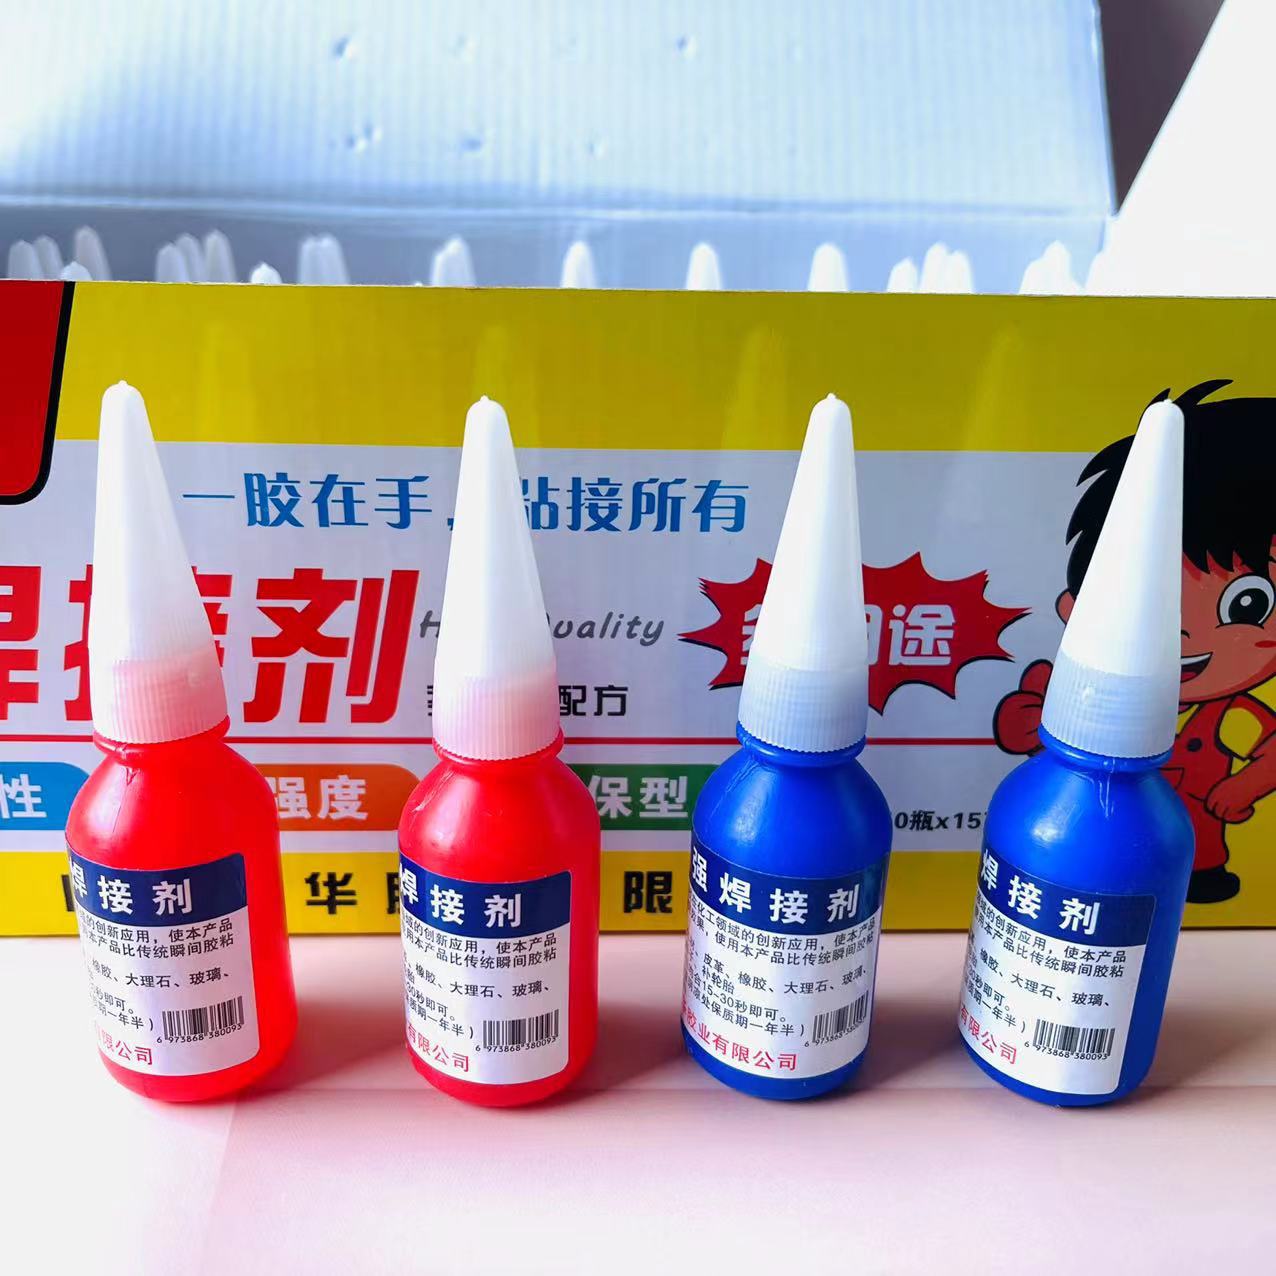 Metal Mastic Adhesive Liquid Welding Agent Plastic Wood Ceramic Adhesive Iron Glue All-Purpose Adhesive 1 Yuan Supply